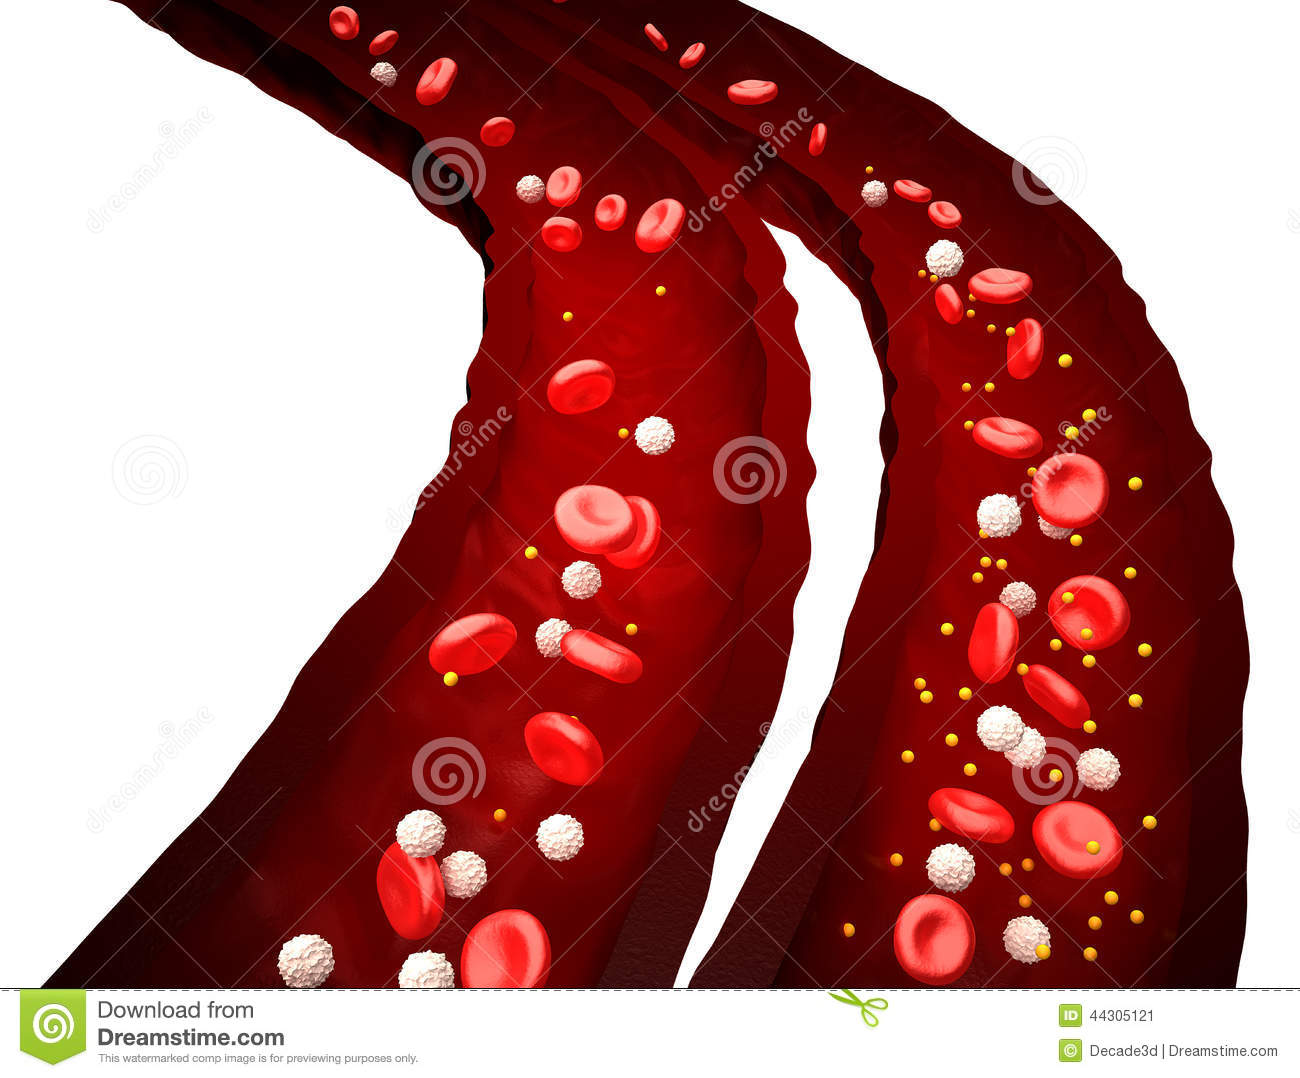 blood-stream-normal-vs-diabetes-isolated-white-human-44305121.jpg